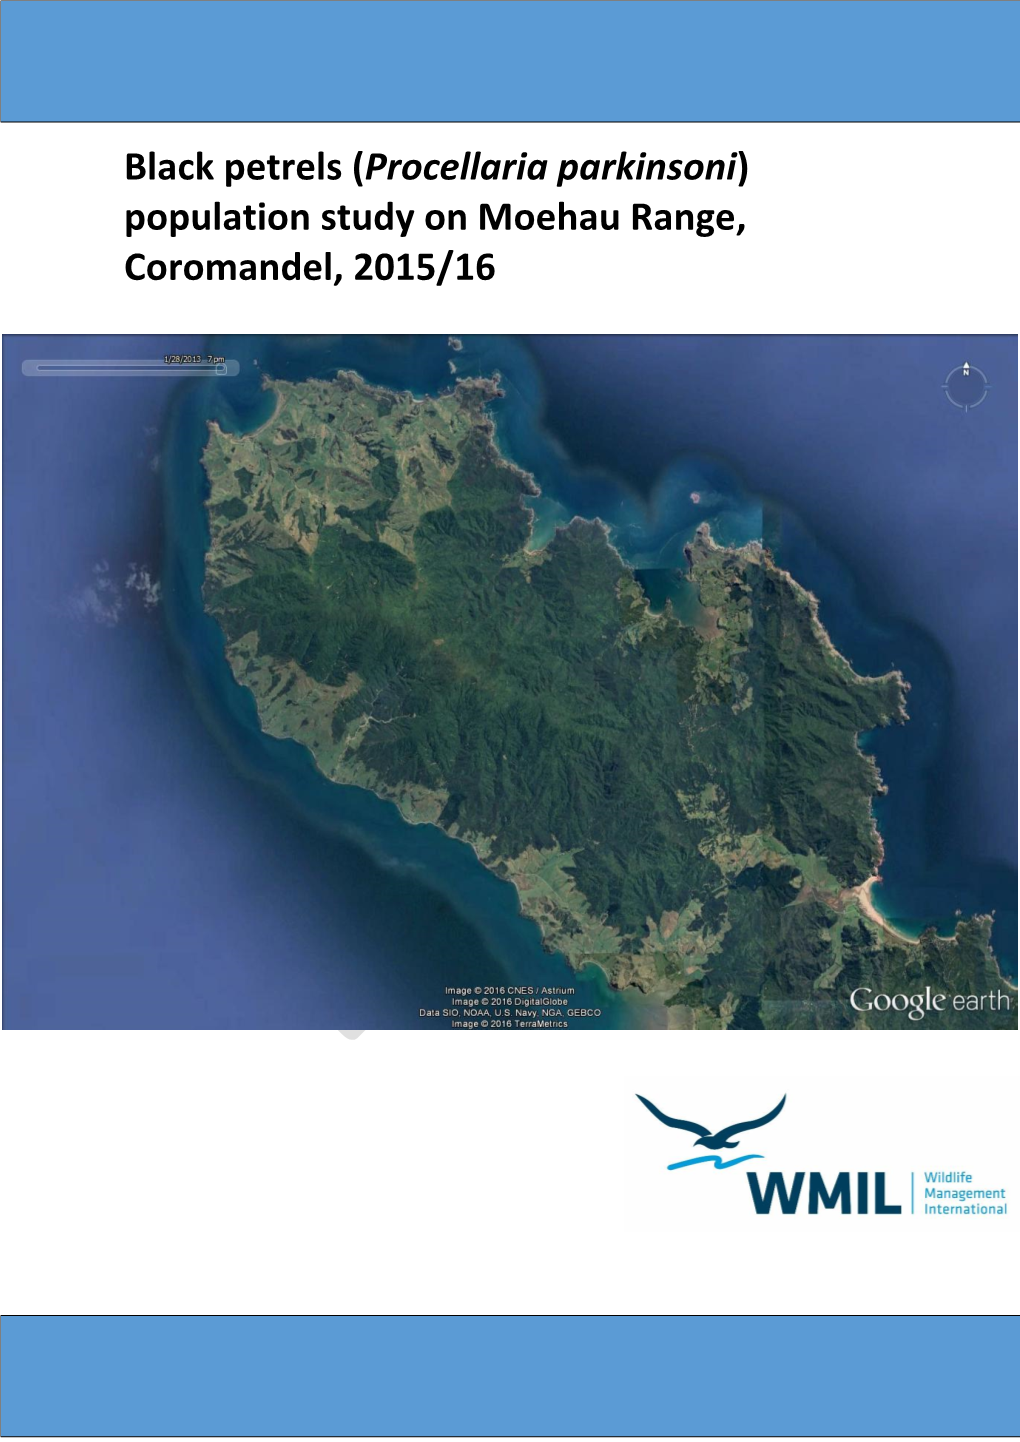 Black Petrels Population Study on Moehau Range, Coromandel, 2015